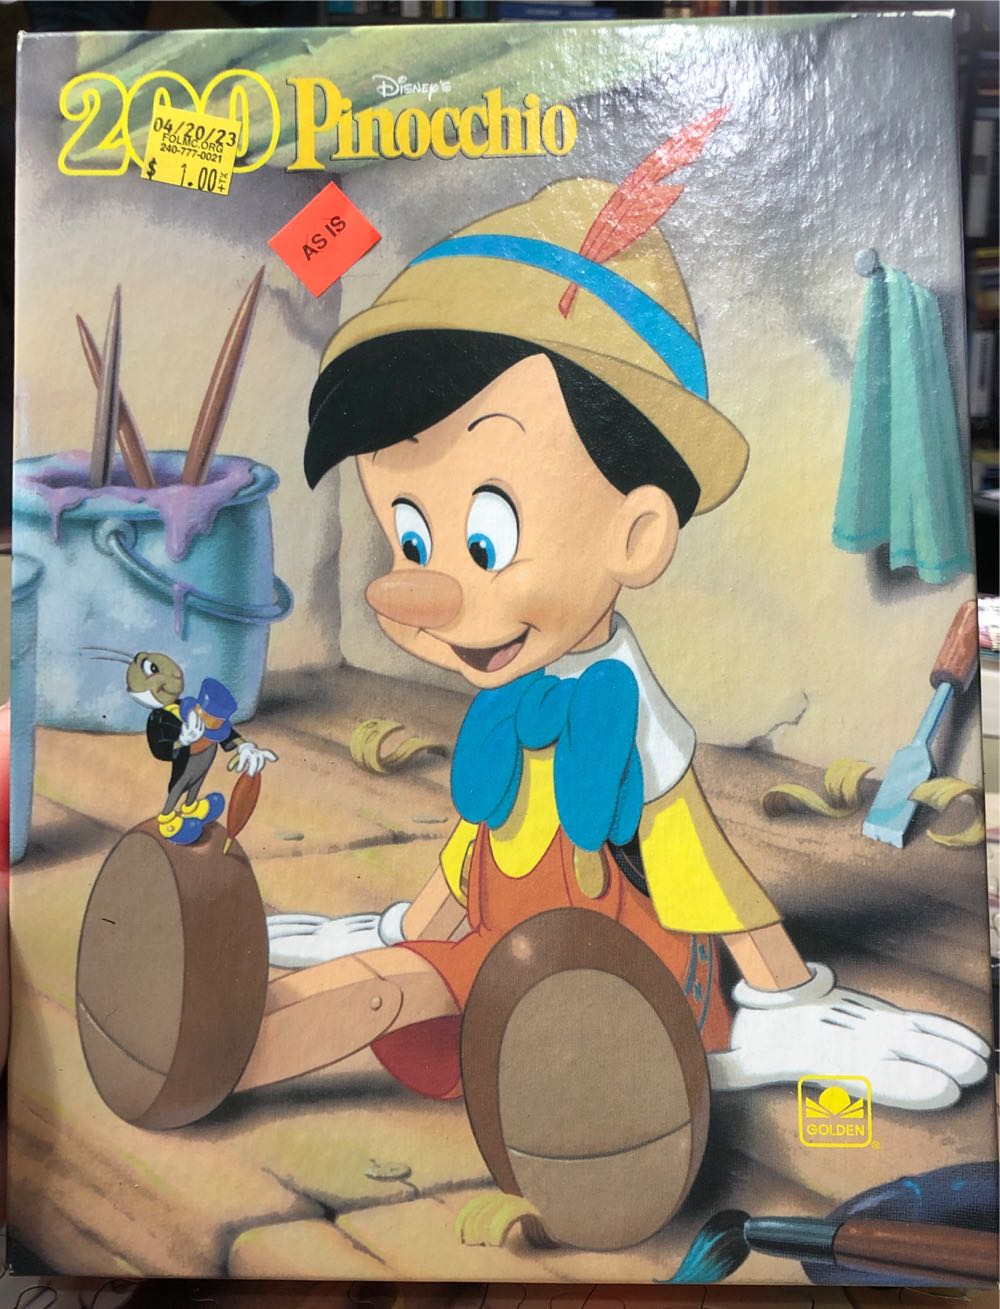 Pinocchio - Golden & Design puzzle collectible [Barcode 033500047169] - Main Image 1